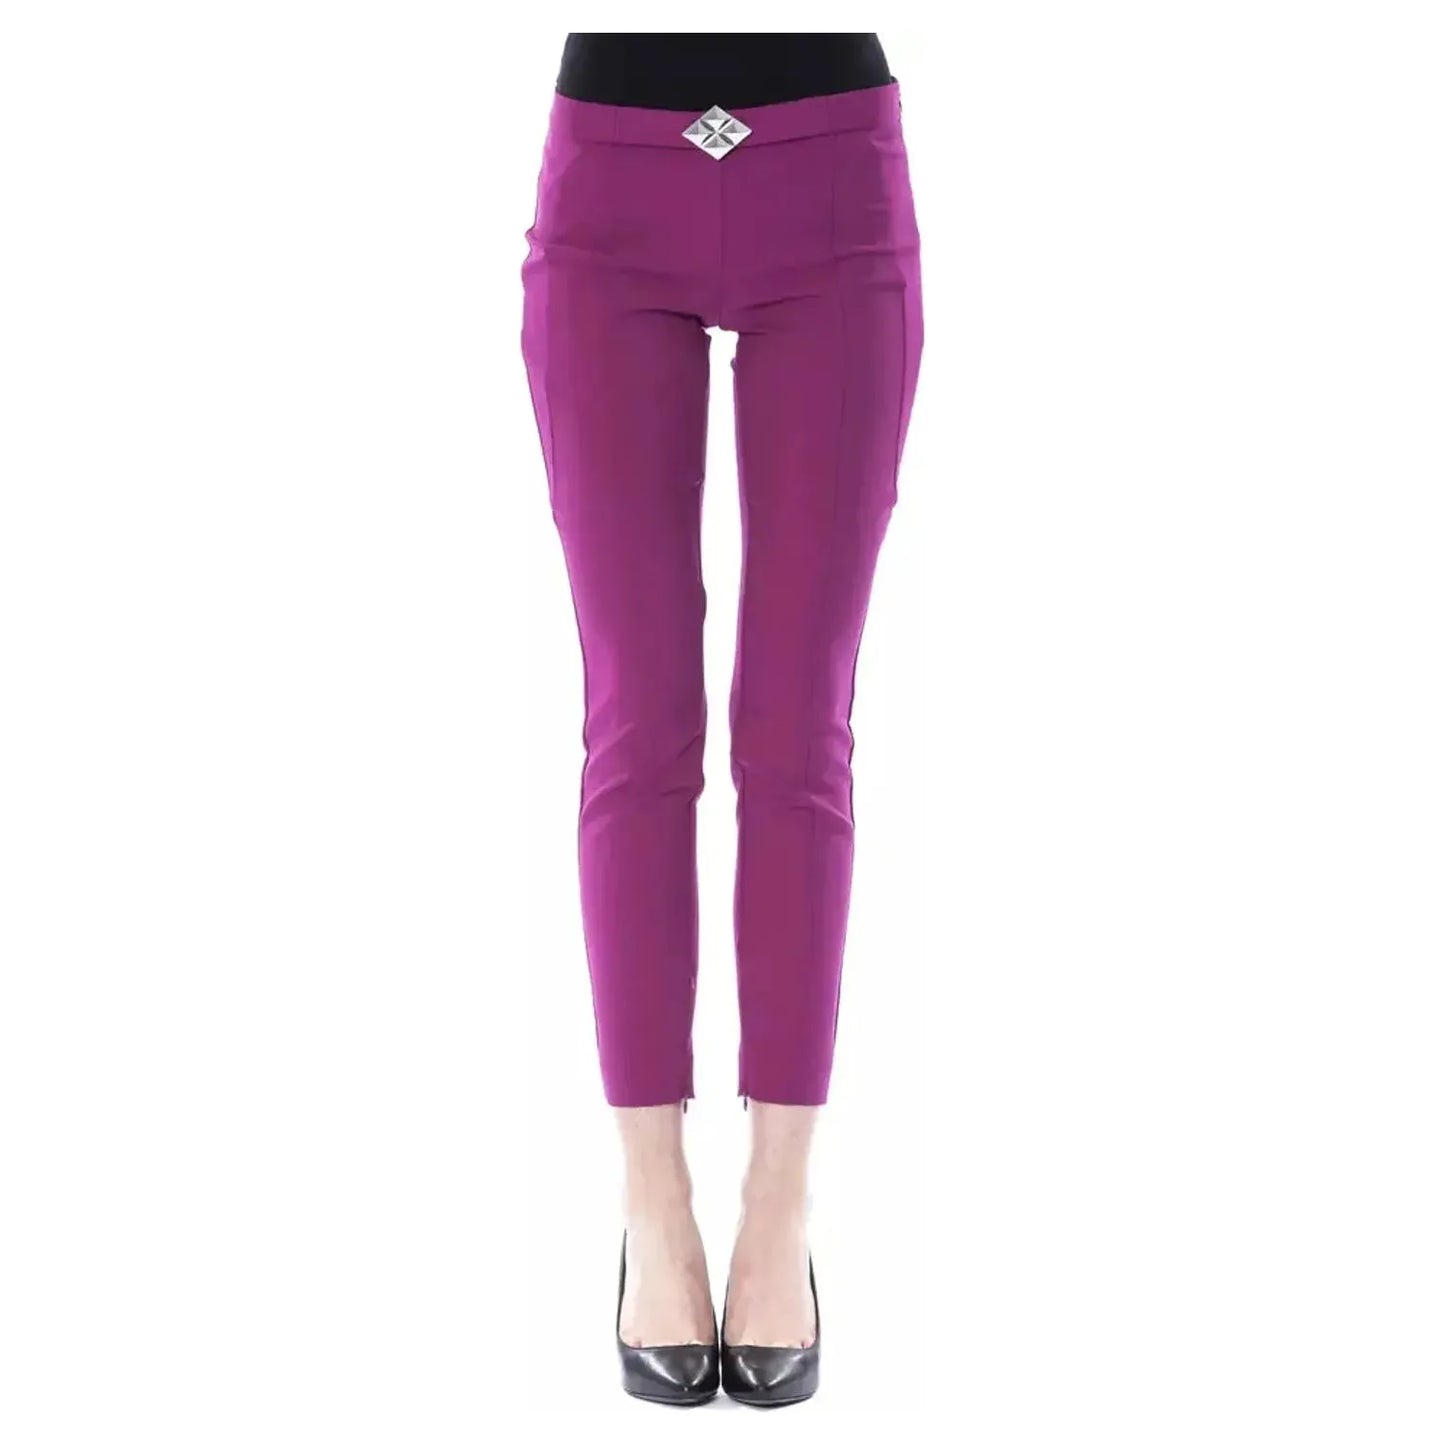 BYBLOS Elegant Purple Skinny Pants with Chic Zip Detail magentabis-jeans-pant